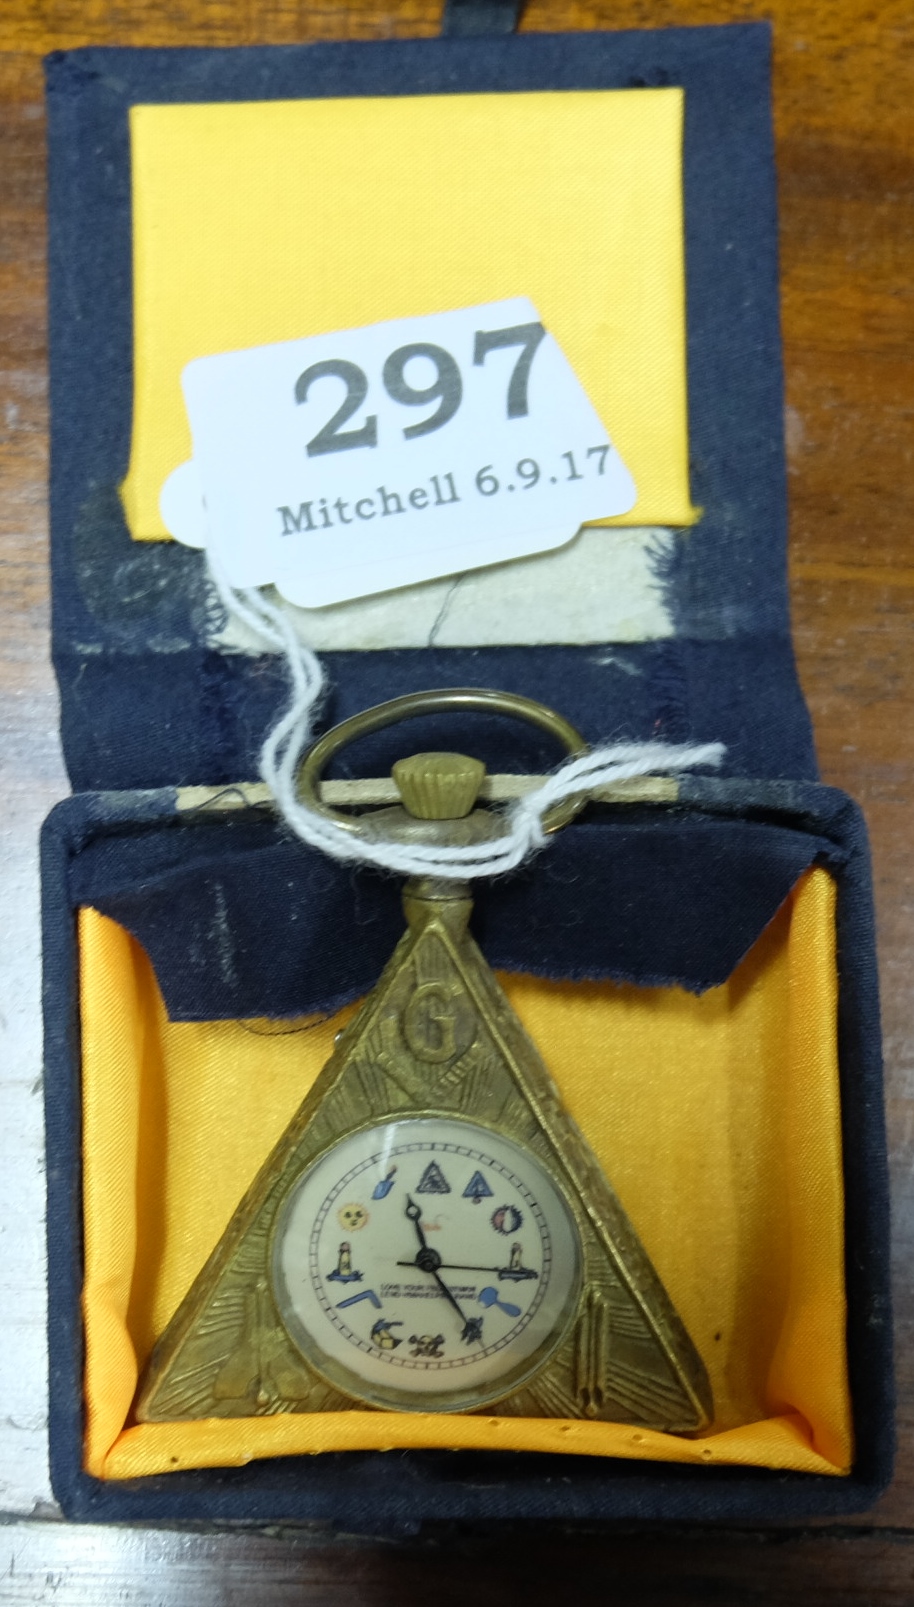 Triangular-shaped pocket watch, Masonic symbols